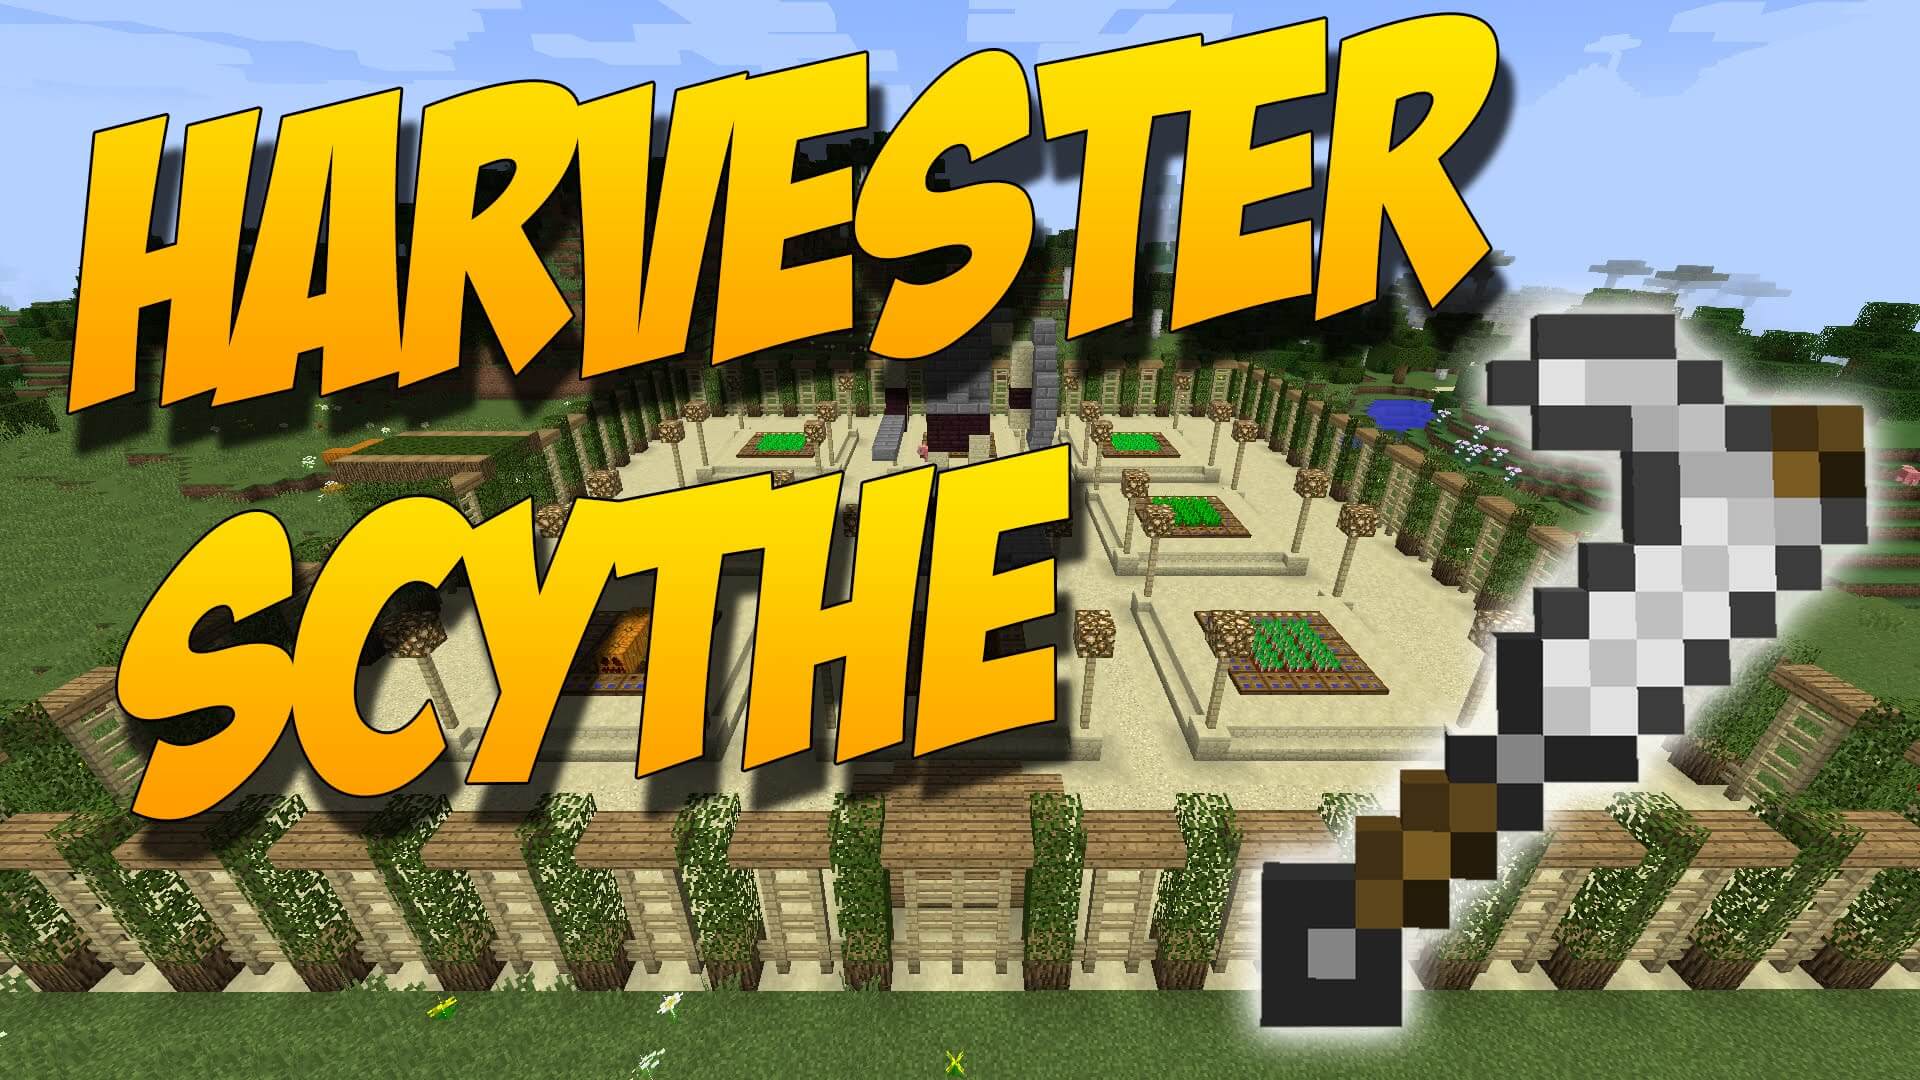 Harvester Scythe скриншот 1